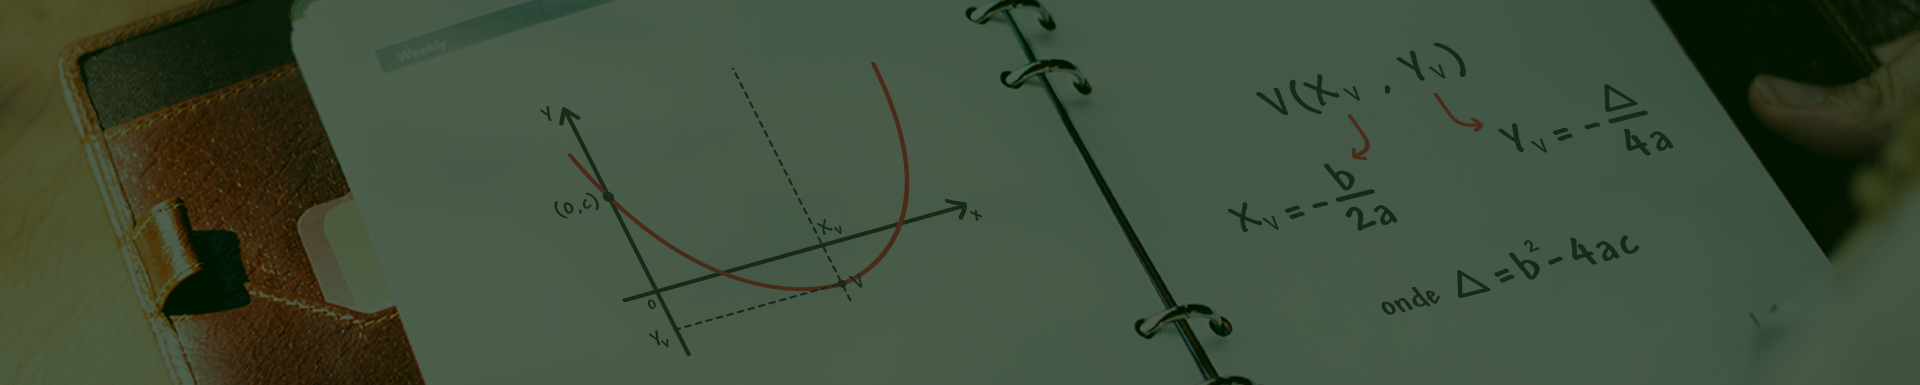 fórmulas das coordenadas do vértice da parábola